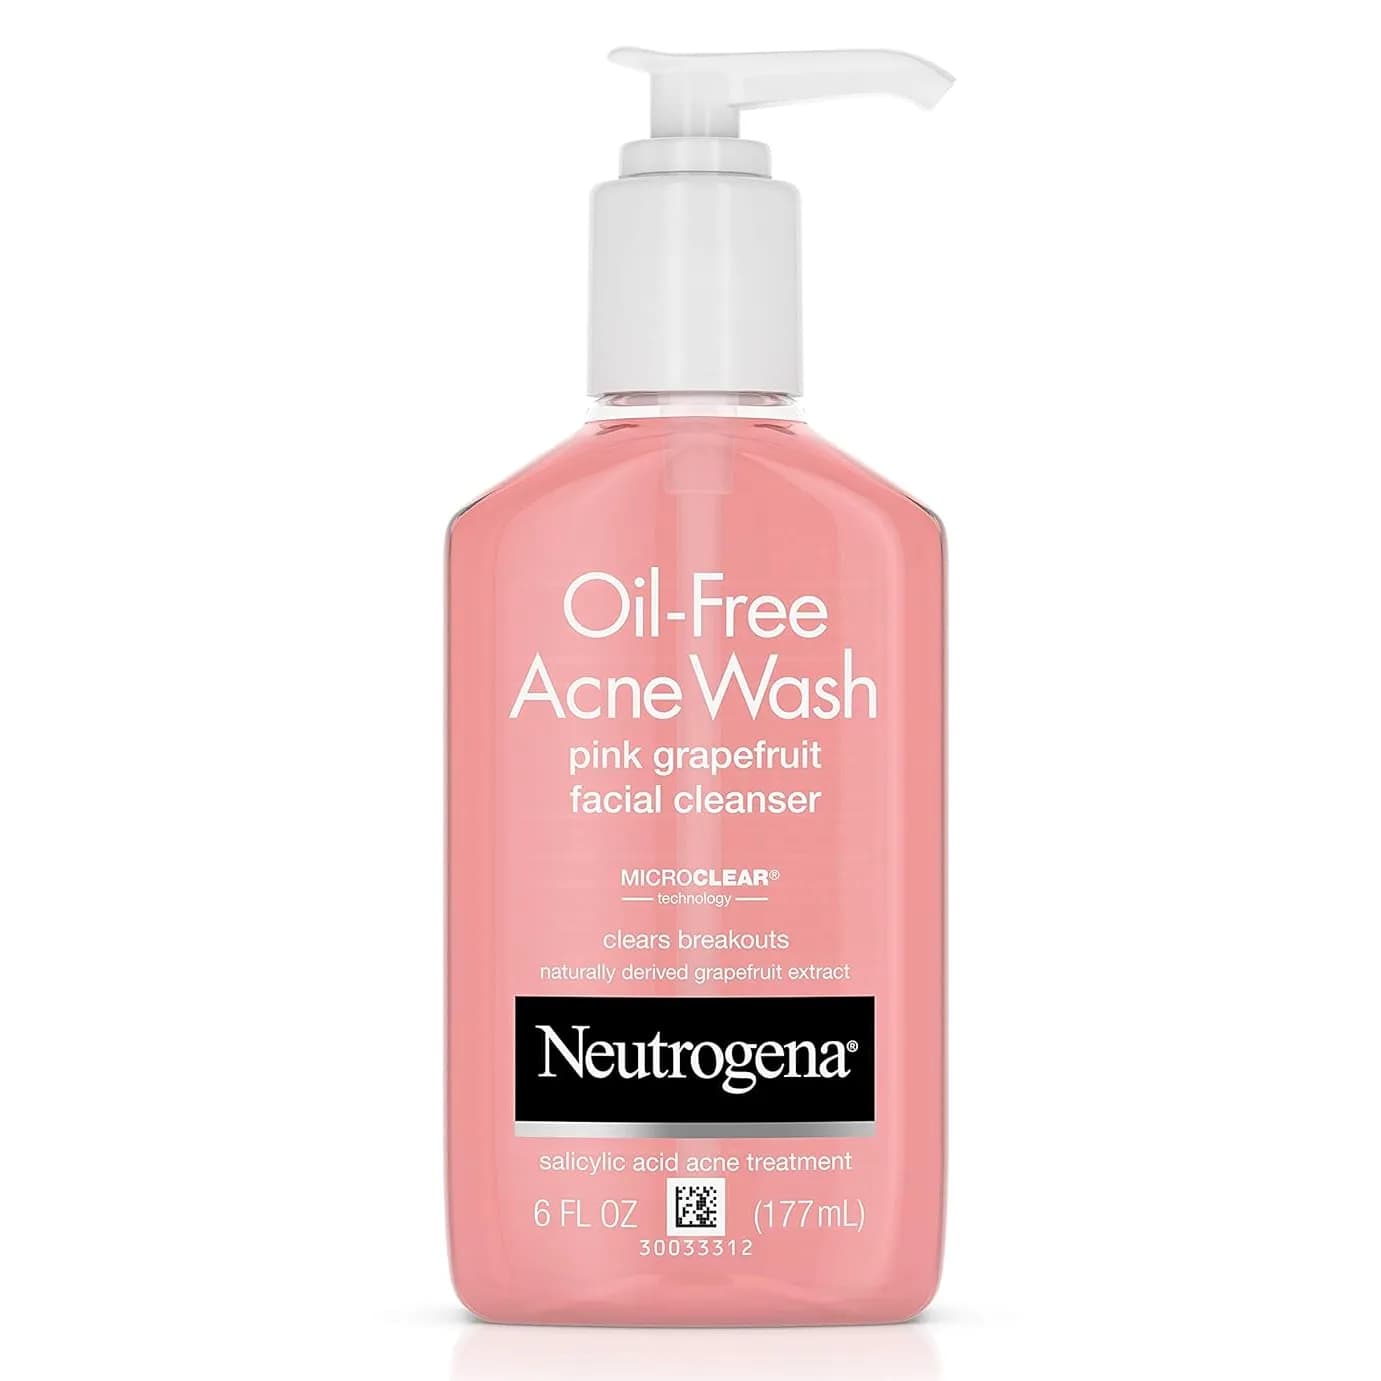 Neutrogena Acne Face Wash Grapefruit Cleanser 177Ml